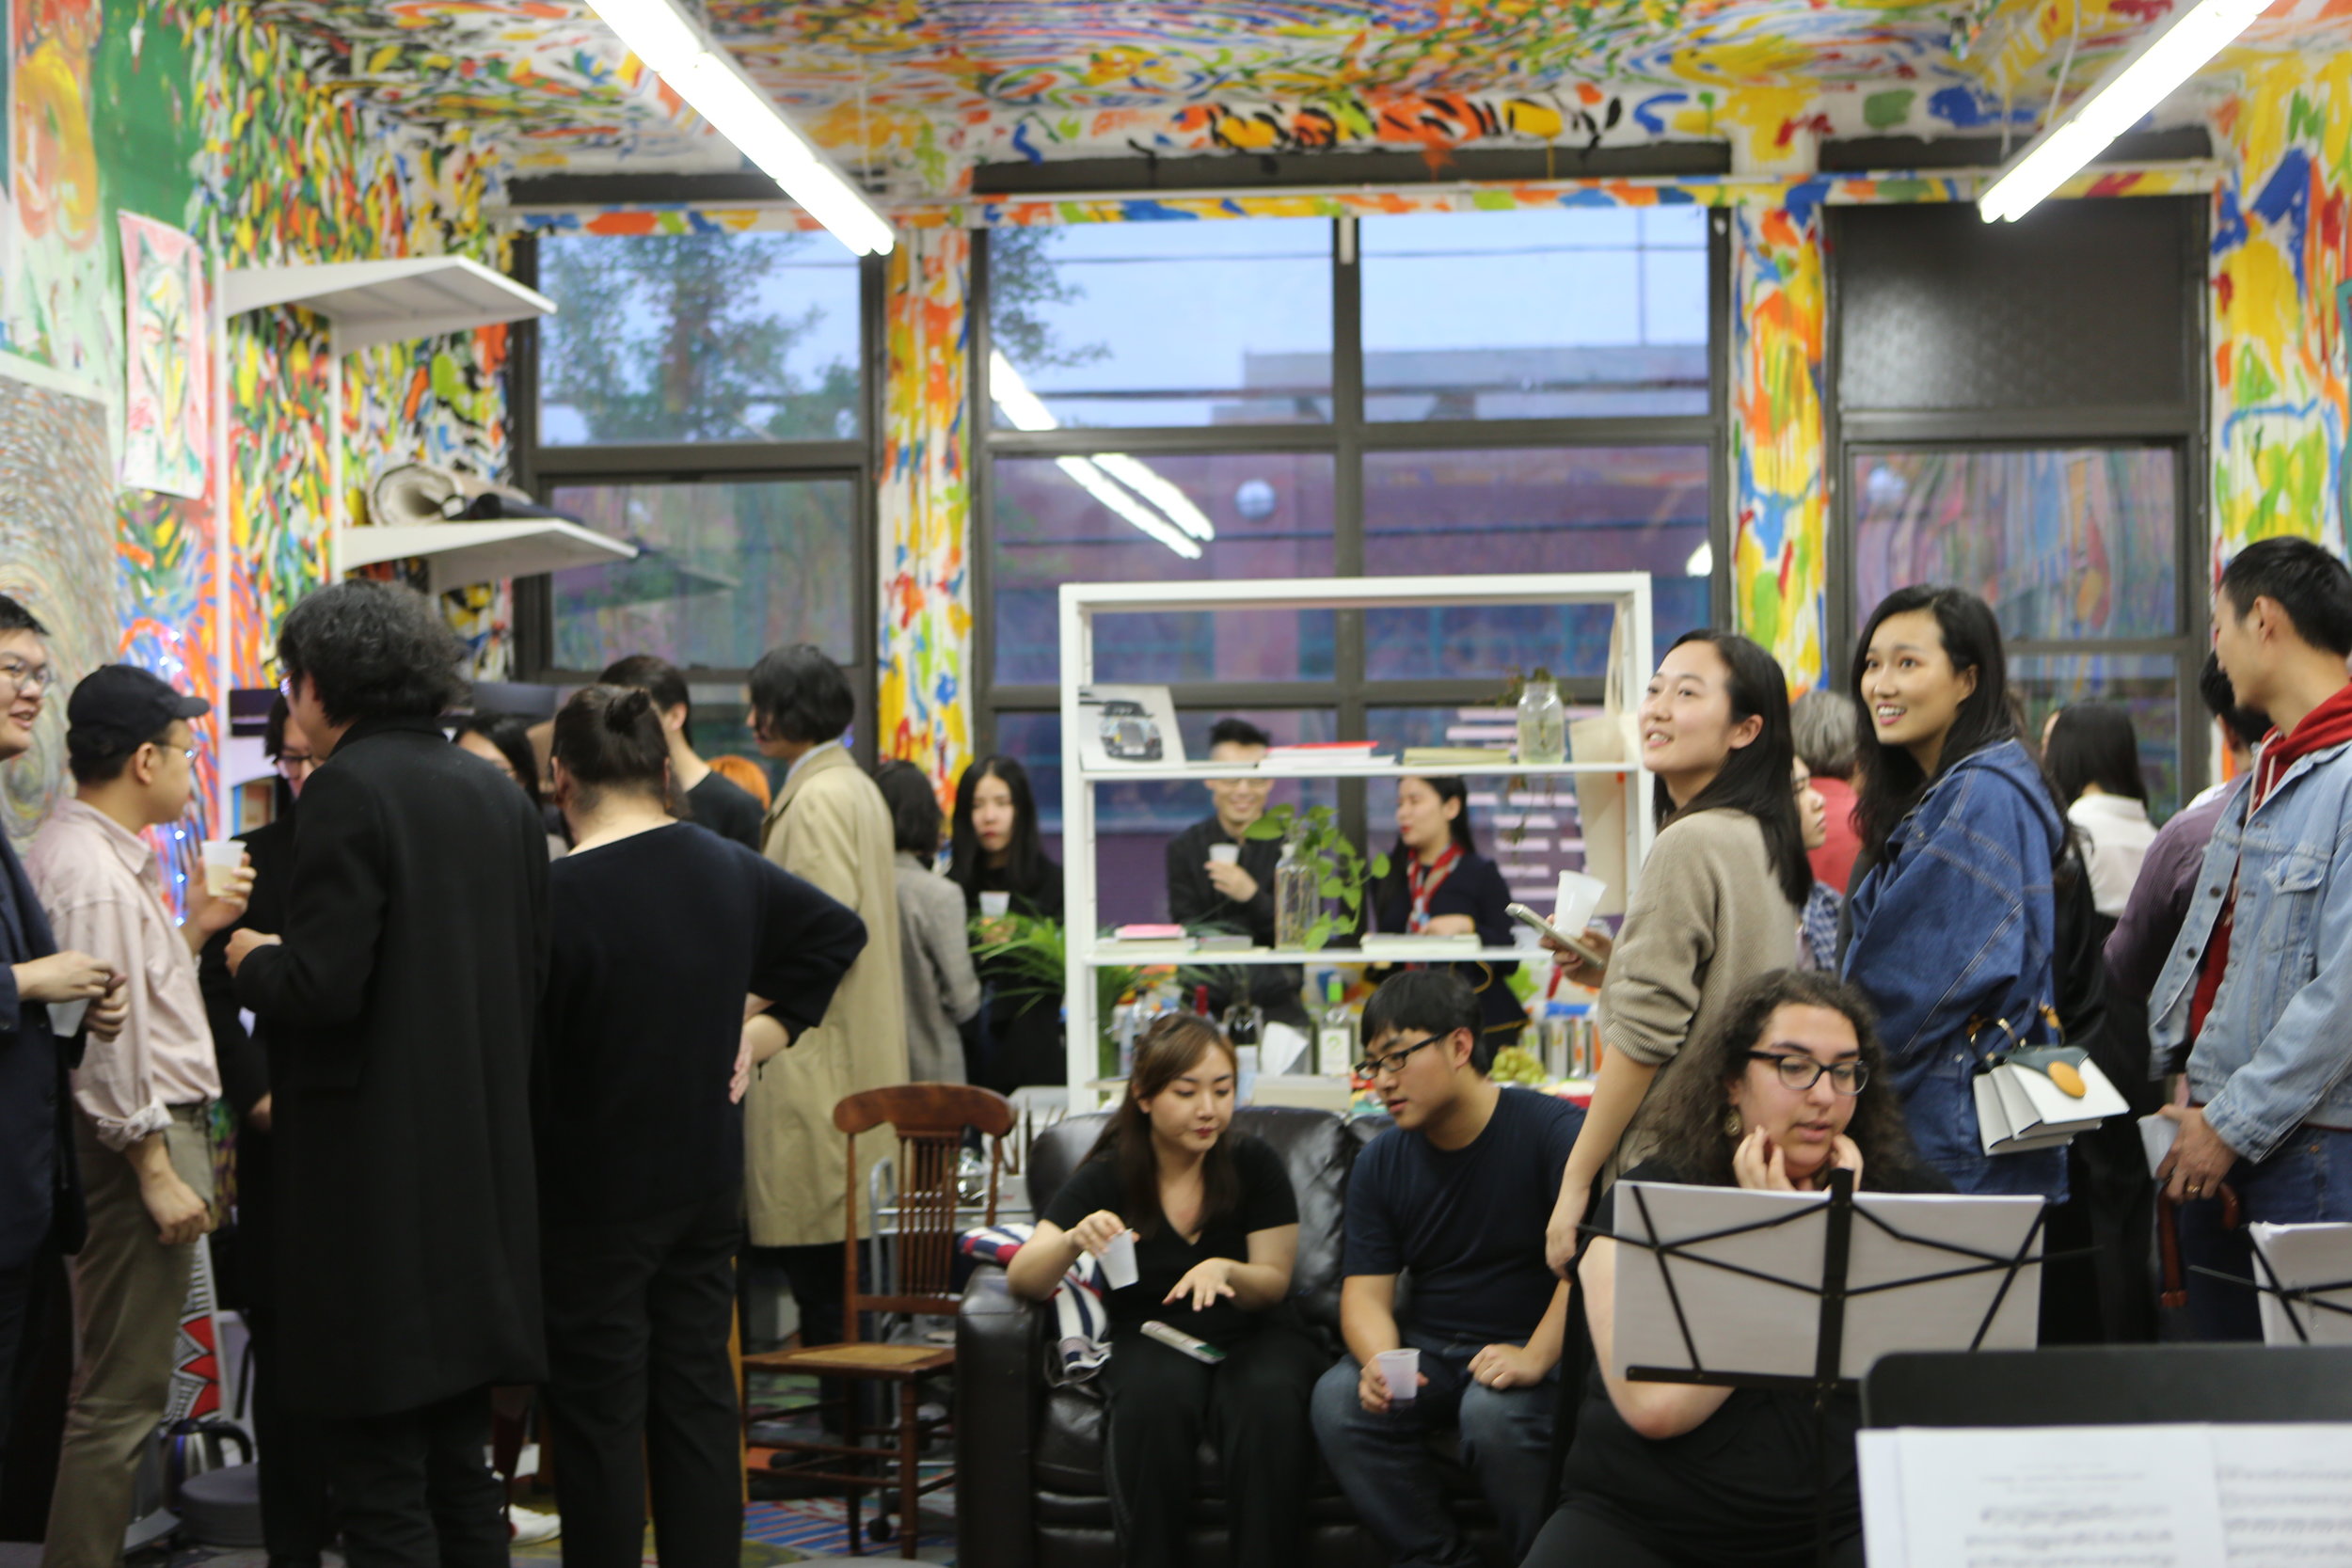   Nevermore - Music Concert  with The Lumisade Quintet at Chen Dongfan Studio. Photograph by Inna Xu.  昨夜星辰昨夜风 - 木管五重奏音乐会@陈栋帆工作室，摄影：徐益英. 